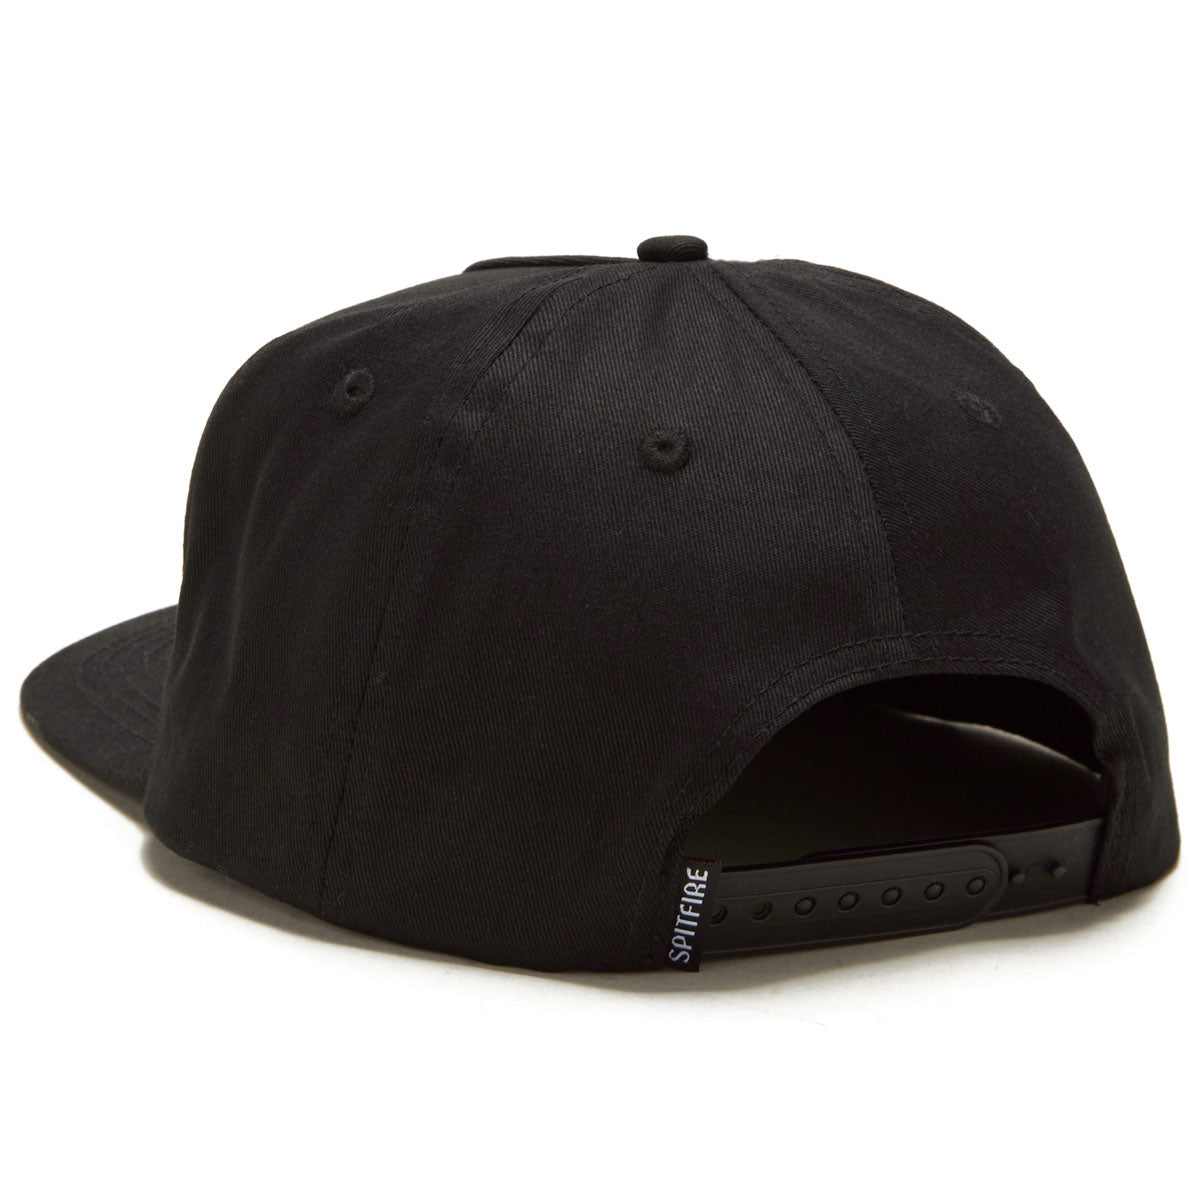 Spitfire Bighead Adjustable Snapback Hat - Black/Black image 2